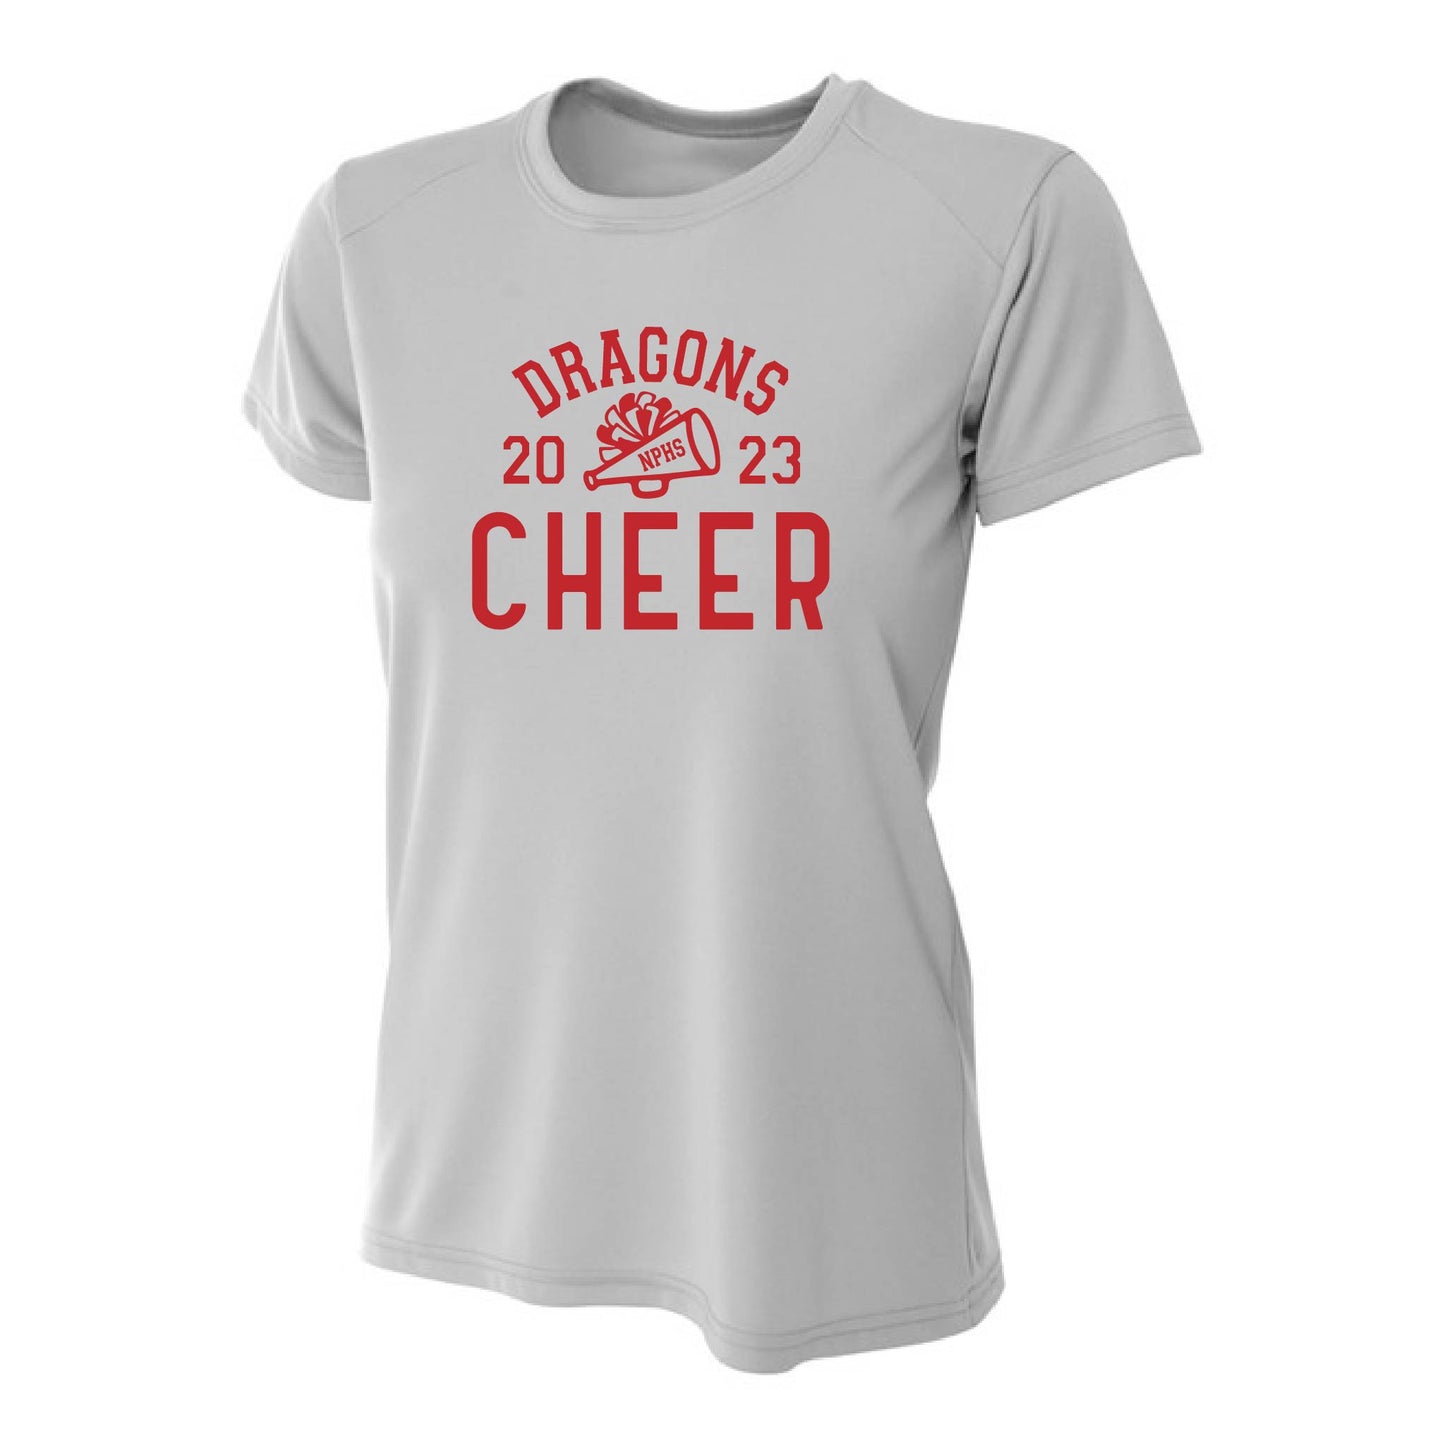 Womens S/S T-Shirt - Dragons Cheer